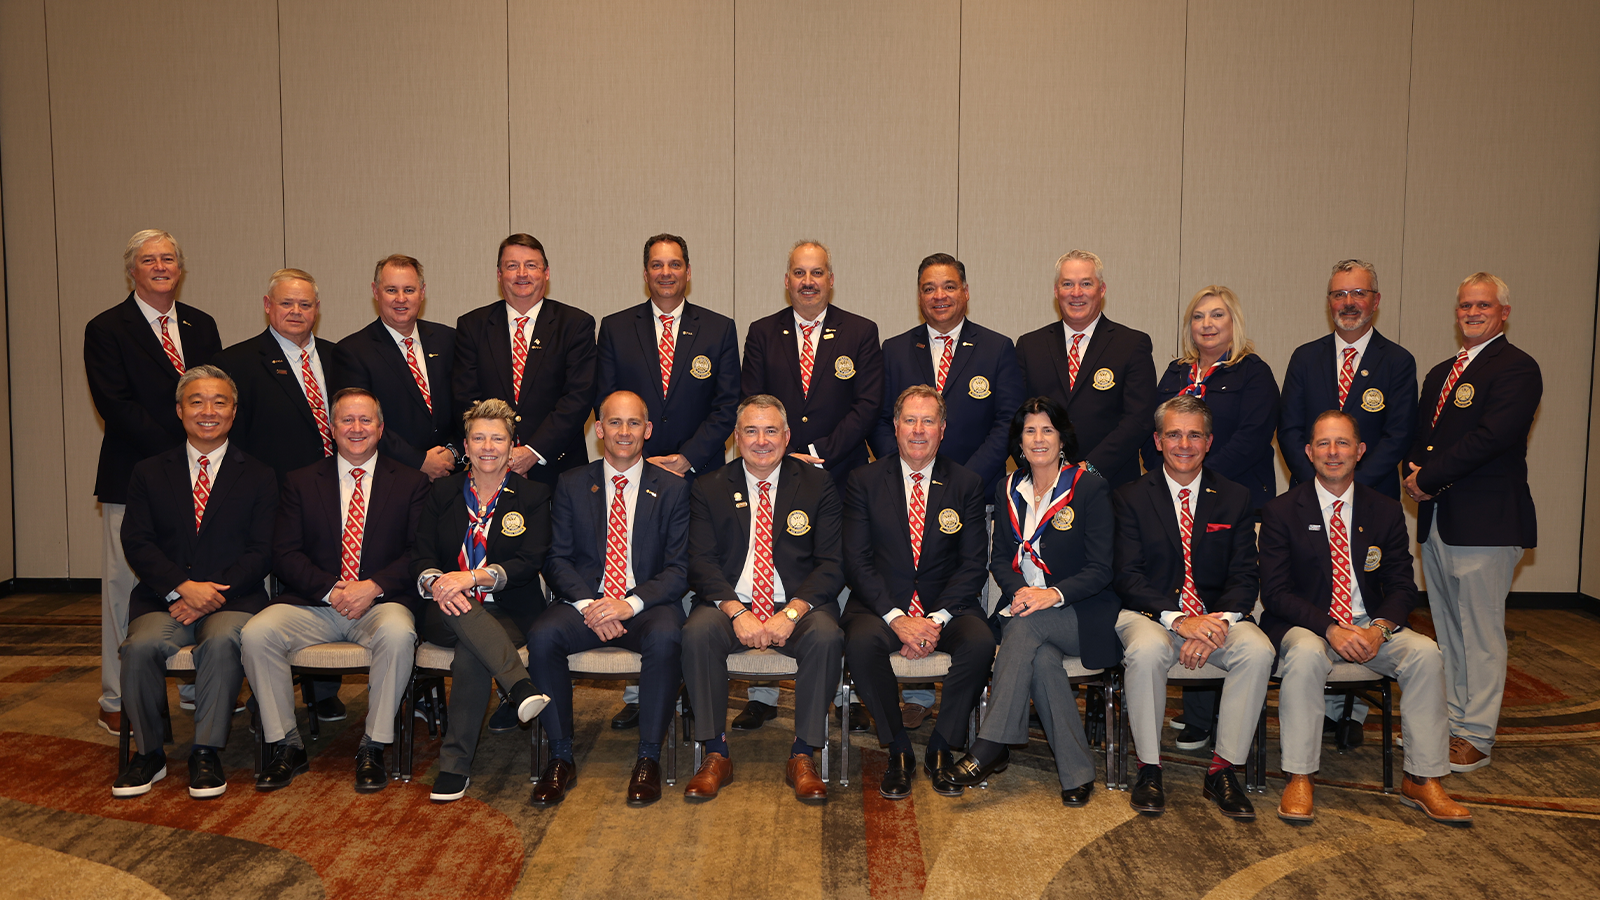 The New PGA Board of Directors pose for a photo during the 106th PGA Annual Meeting at JW Marriott Phoenix Desert Ridge Resort & Spa on Thursday, November 3, 2022 in Phoenix, Arizona. (Photo by Sam Greenwood/PGA of America)